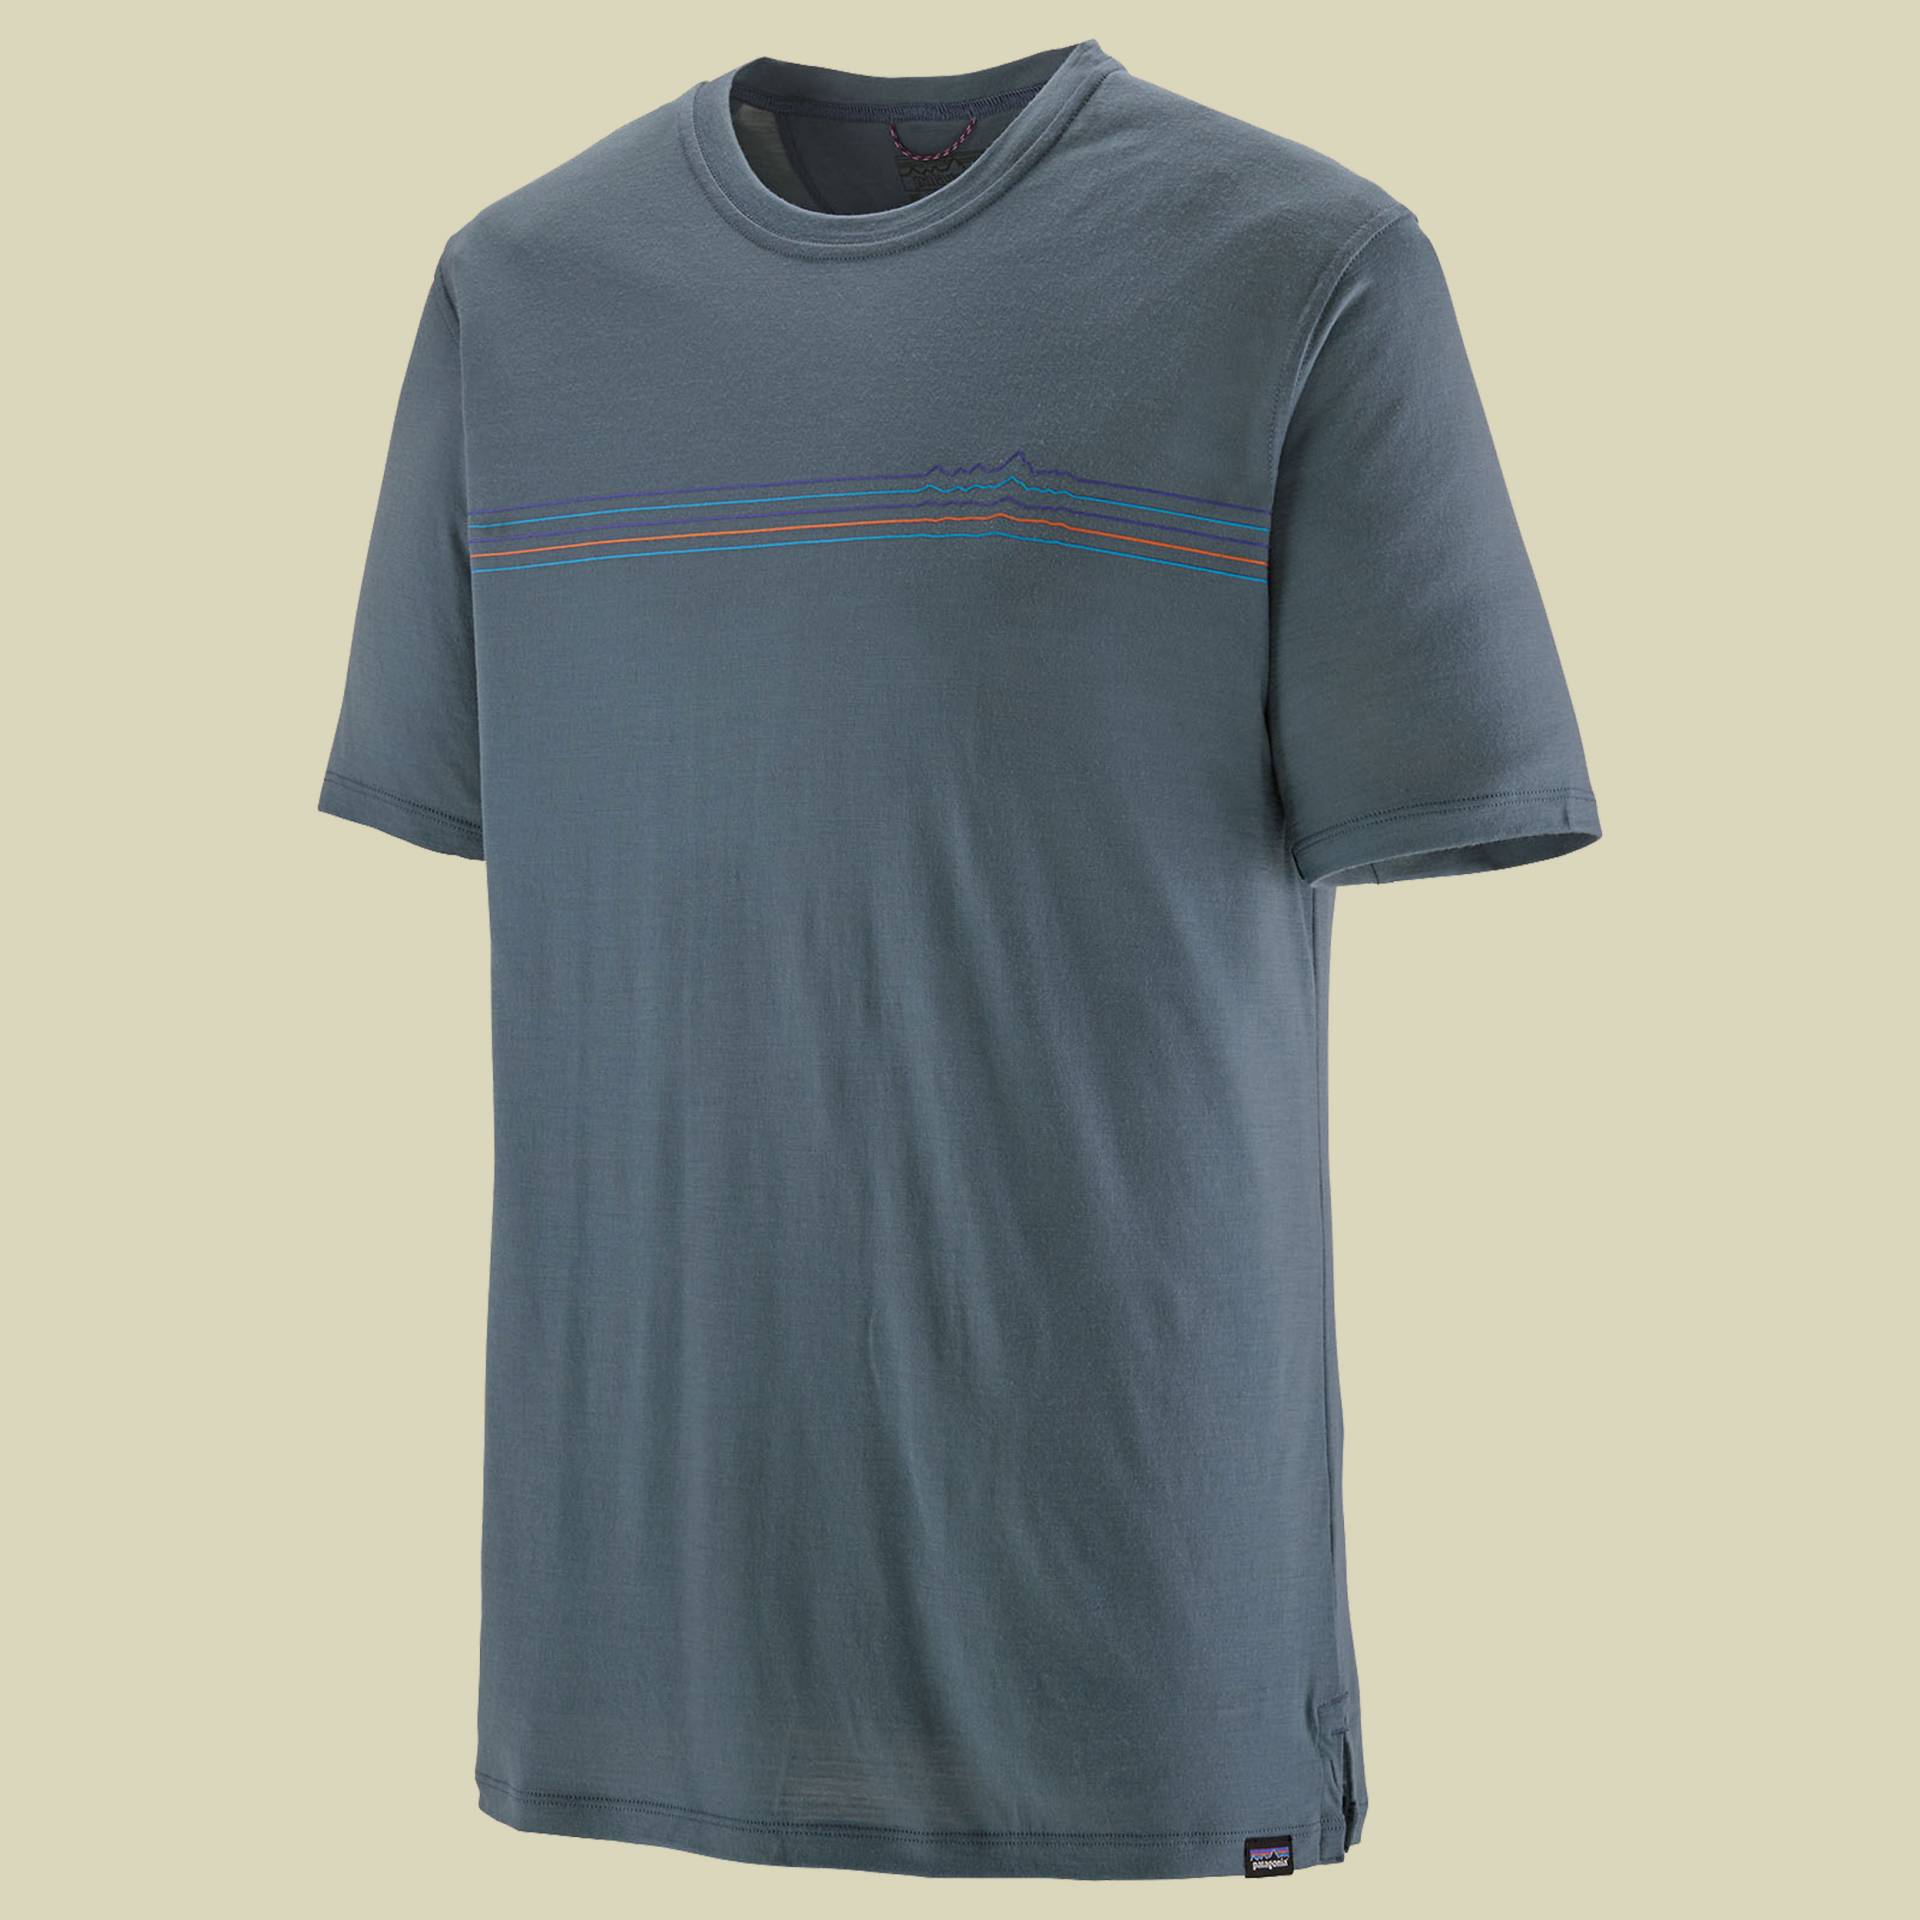 Cap Cool Merino Blend Graphic Shirt Men M blau - fitz roy fader:utility blue von Patagonia